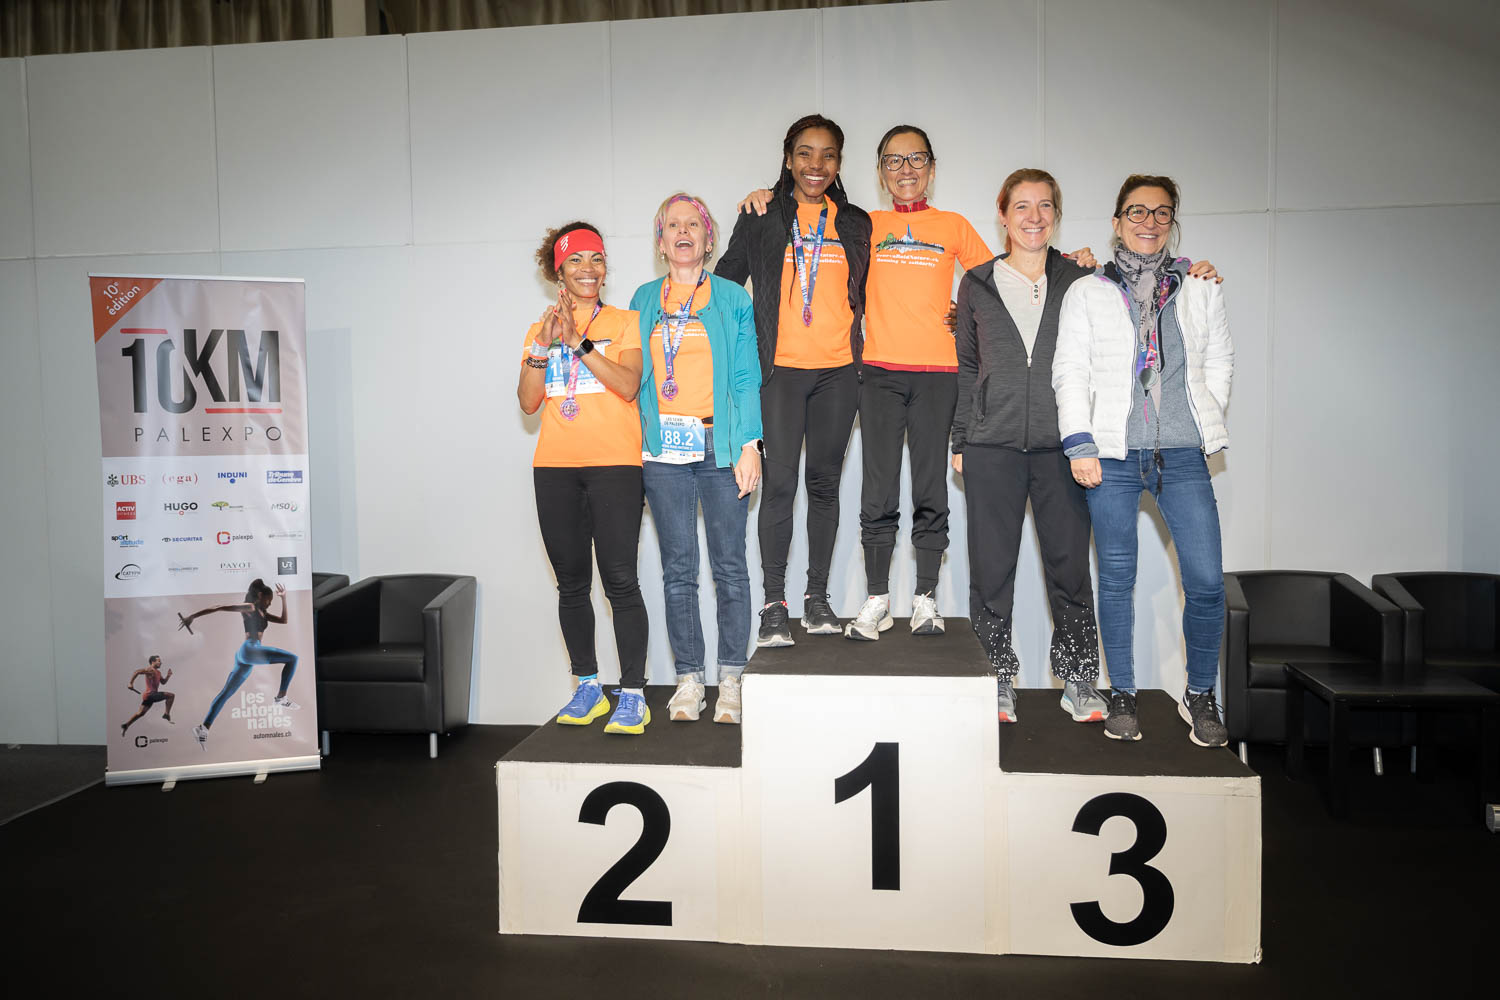 10km de Palexpo - podium catégorie femme